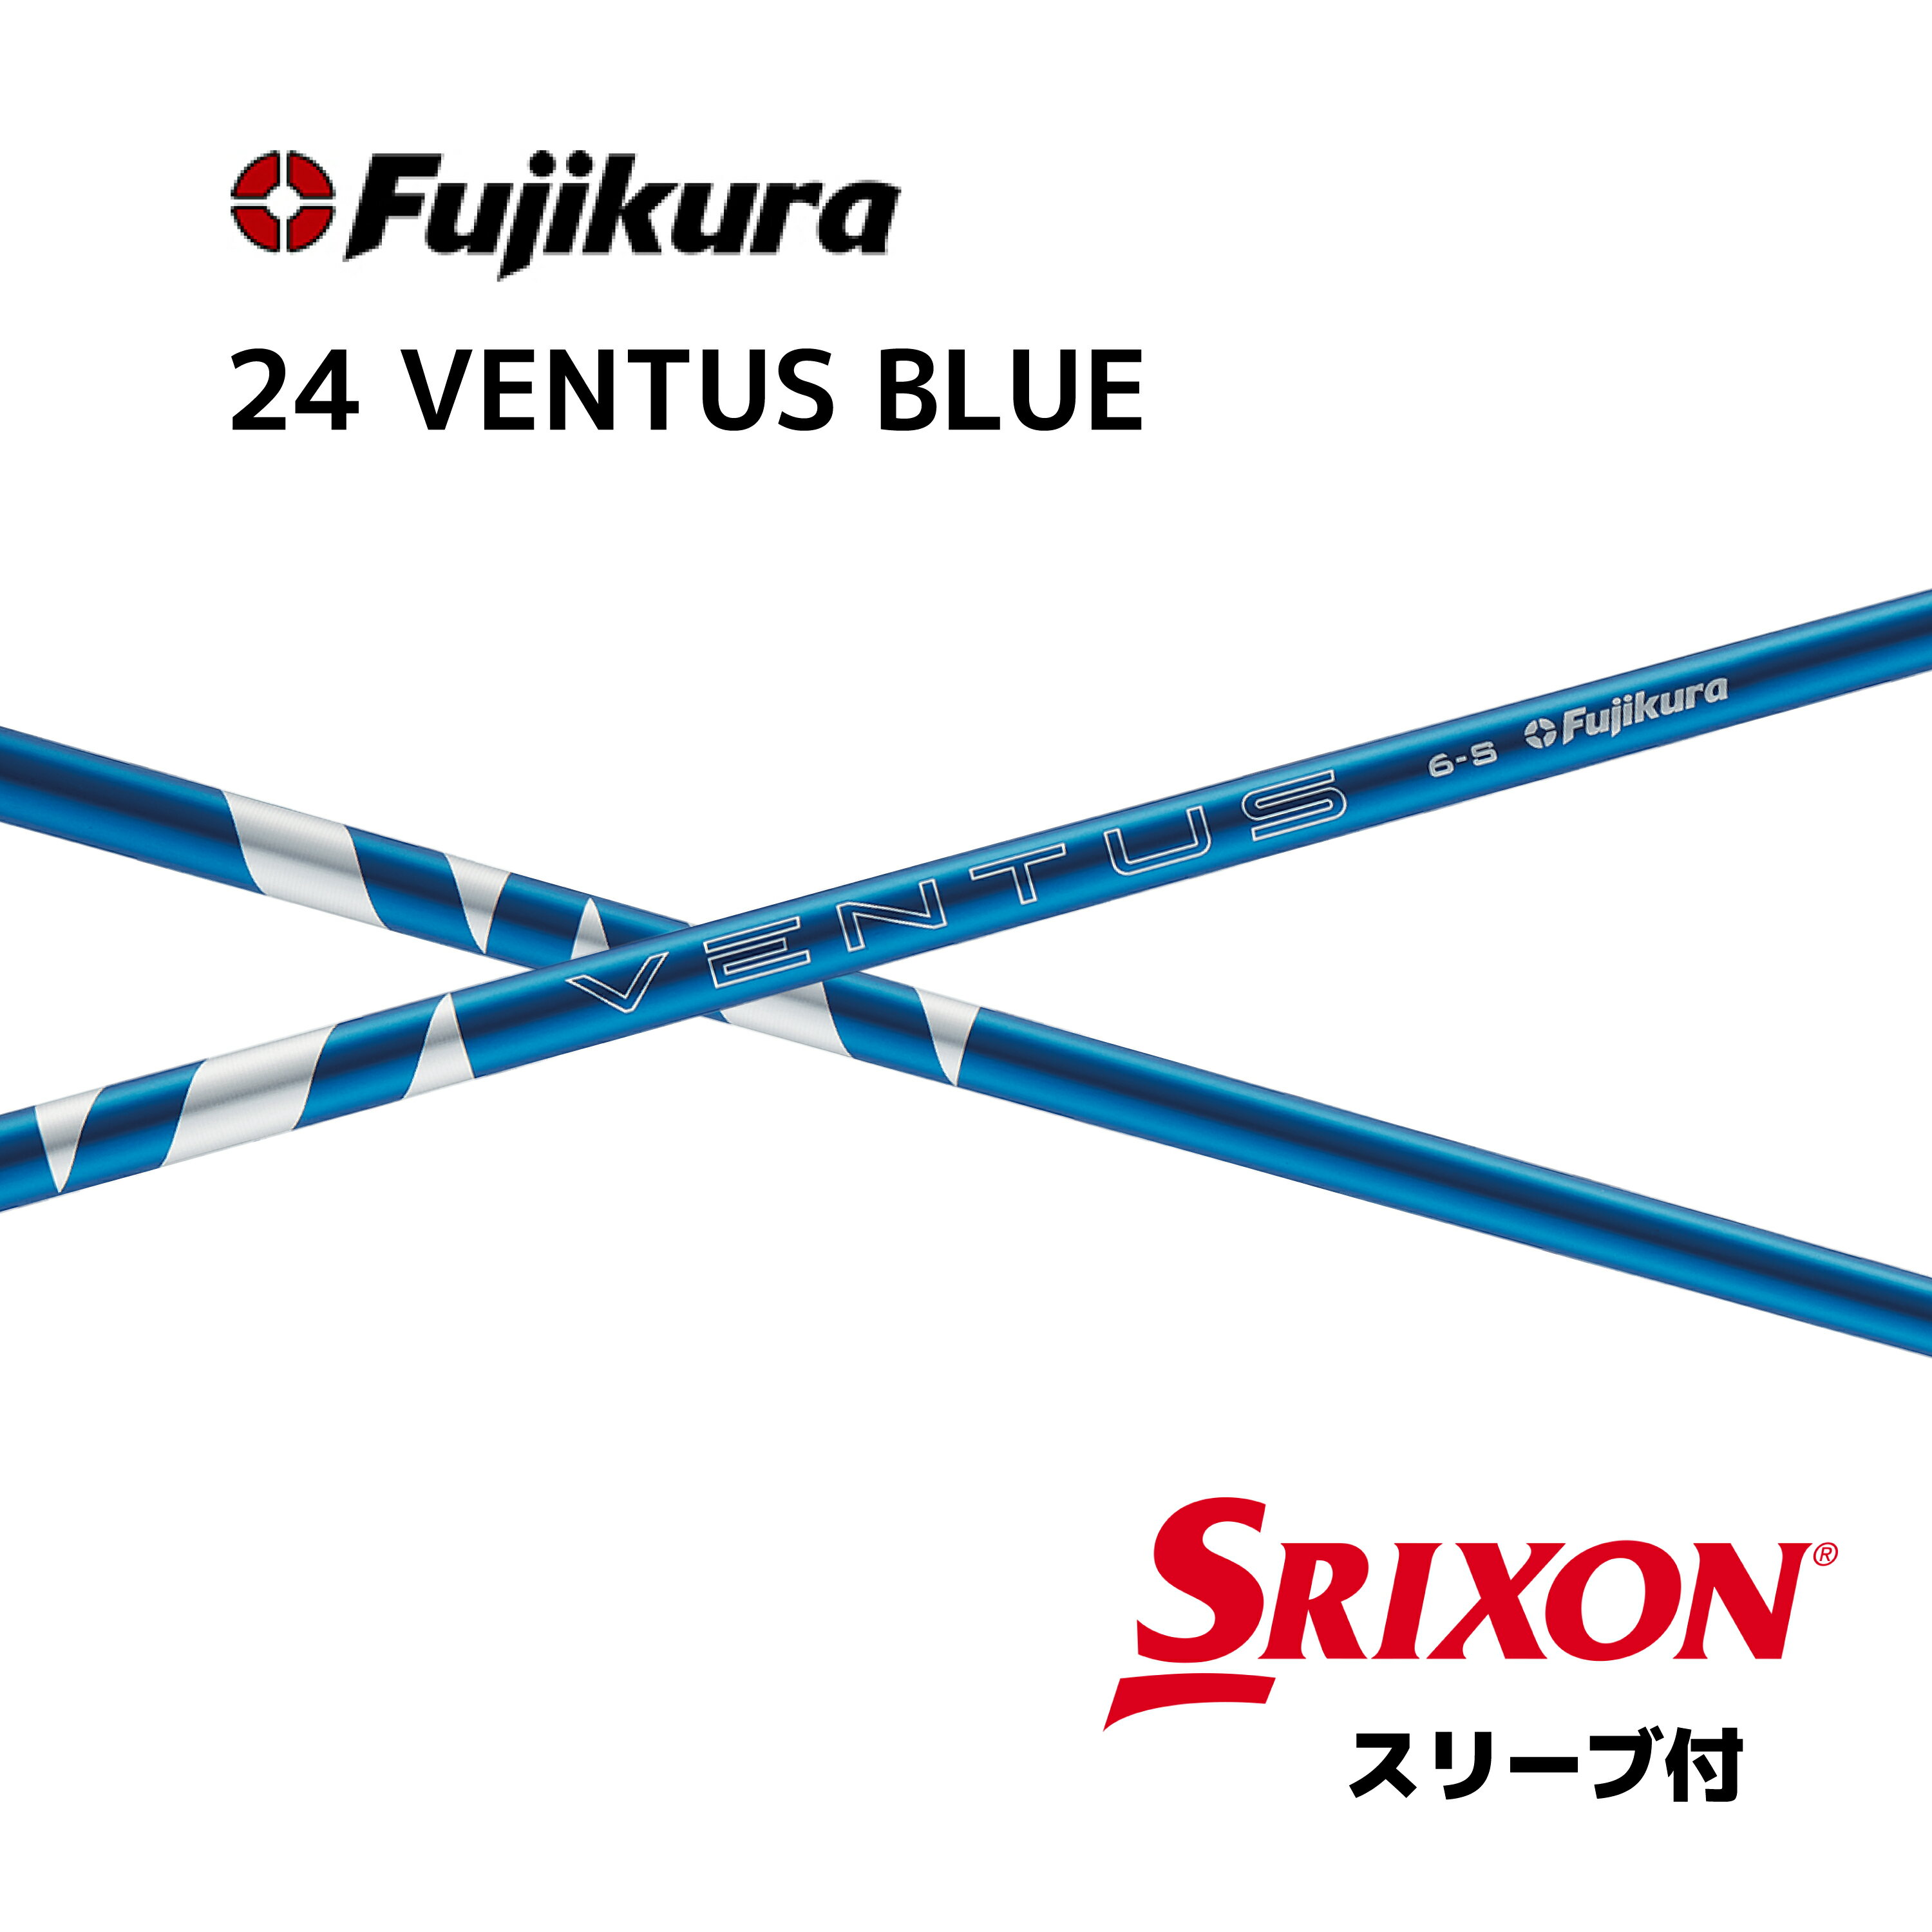 24VENTUS BLUE 日本仕様 ベロコア フジクラ シャフト 24ventus blue ベンタス ブラック ゼクシオ スリクソン SRIXON XXIO bend福岡 ベンド福岡